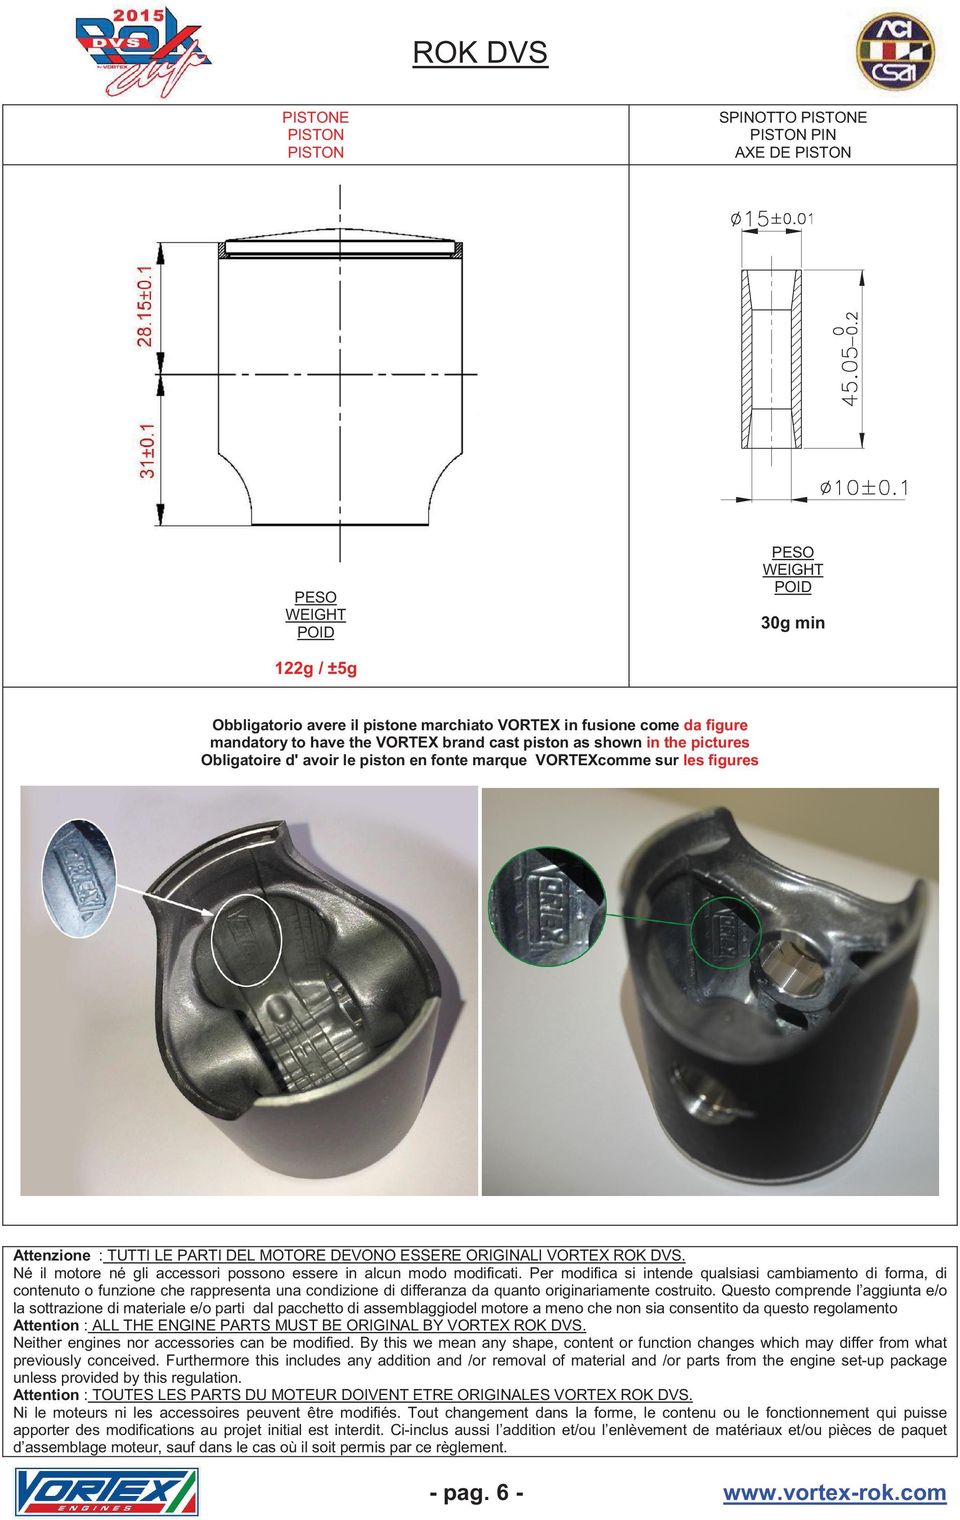 da figure mandatory to have the VORTEX brand cast piston as shown in the pictures Obligatoire